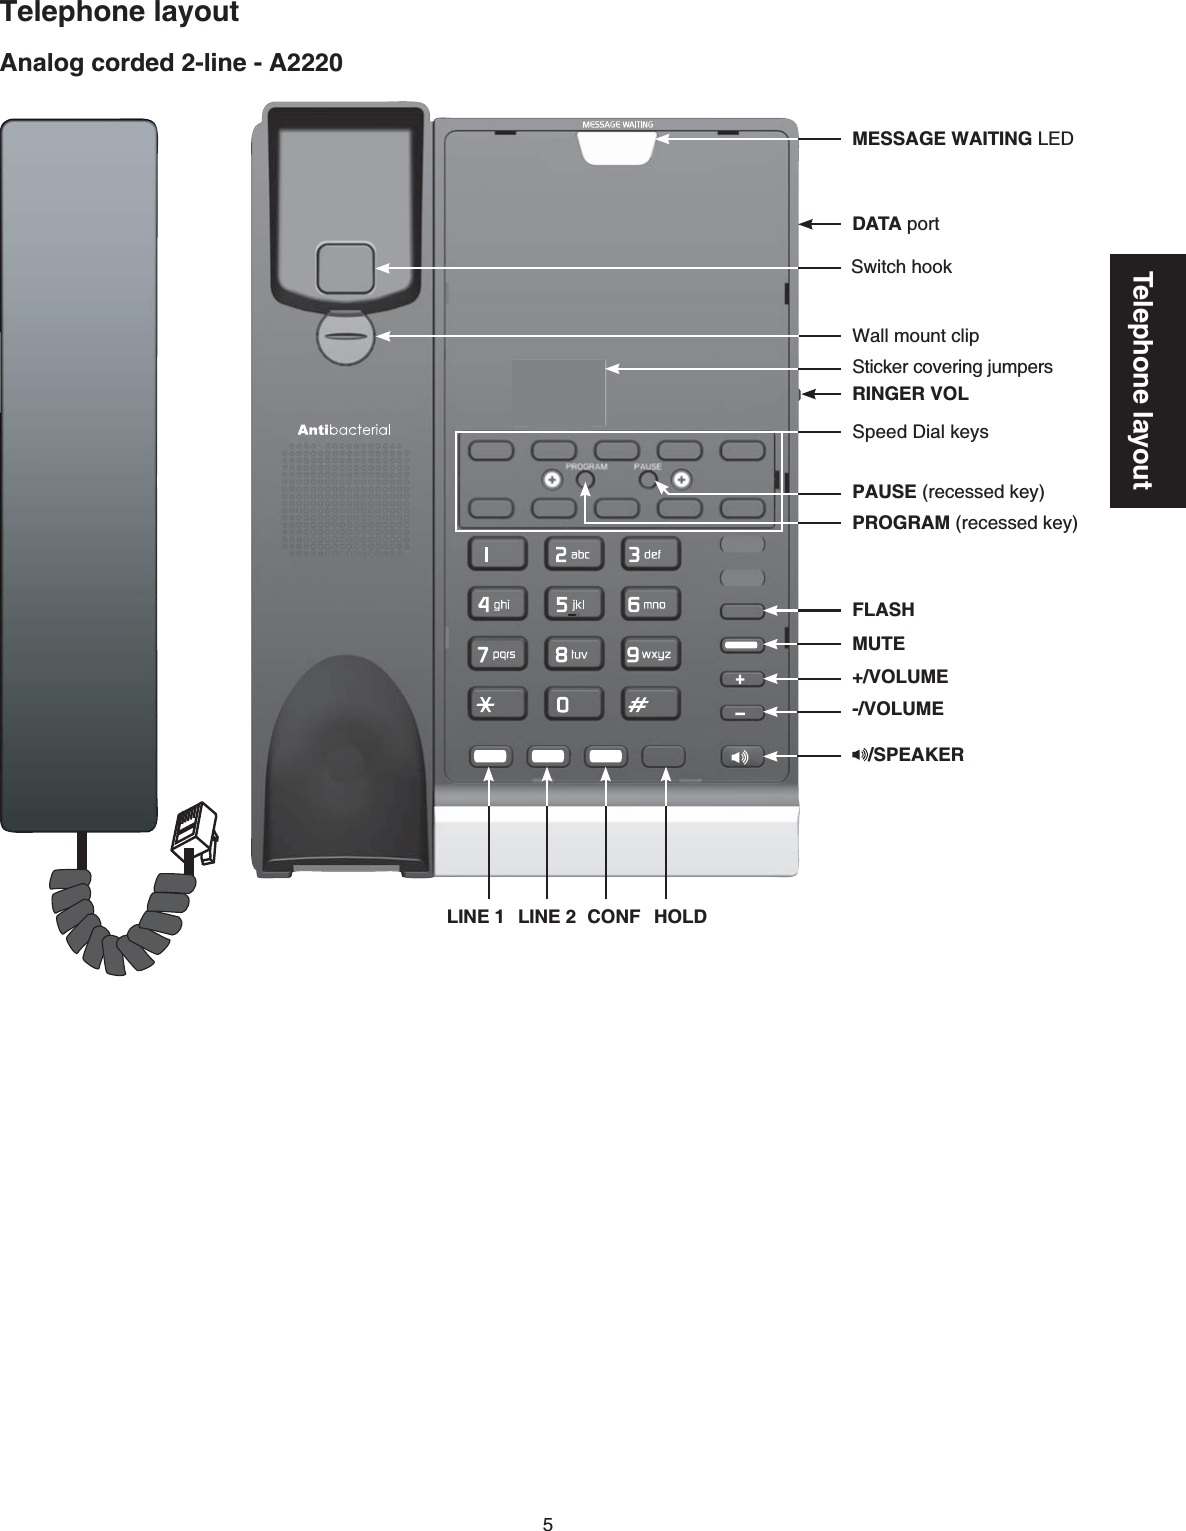 5Telephone layoutTelephone layoutAnalog corded 2-line - A2220LINE 1 LINE 2 CONF HOLDMUTEFLASHSpeed Dial keysDATA portMESSAGE WAITING LEDRINGER VOL/SPEAKERWall mount clipPROGRAM (recessed key)PAUSE (recessed key)-/VOLUME+/VOLUMESwitch hookSticker covering jumpers